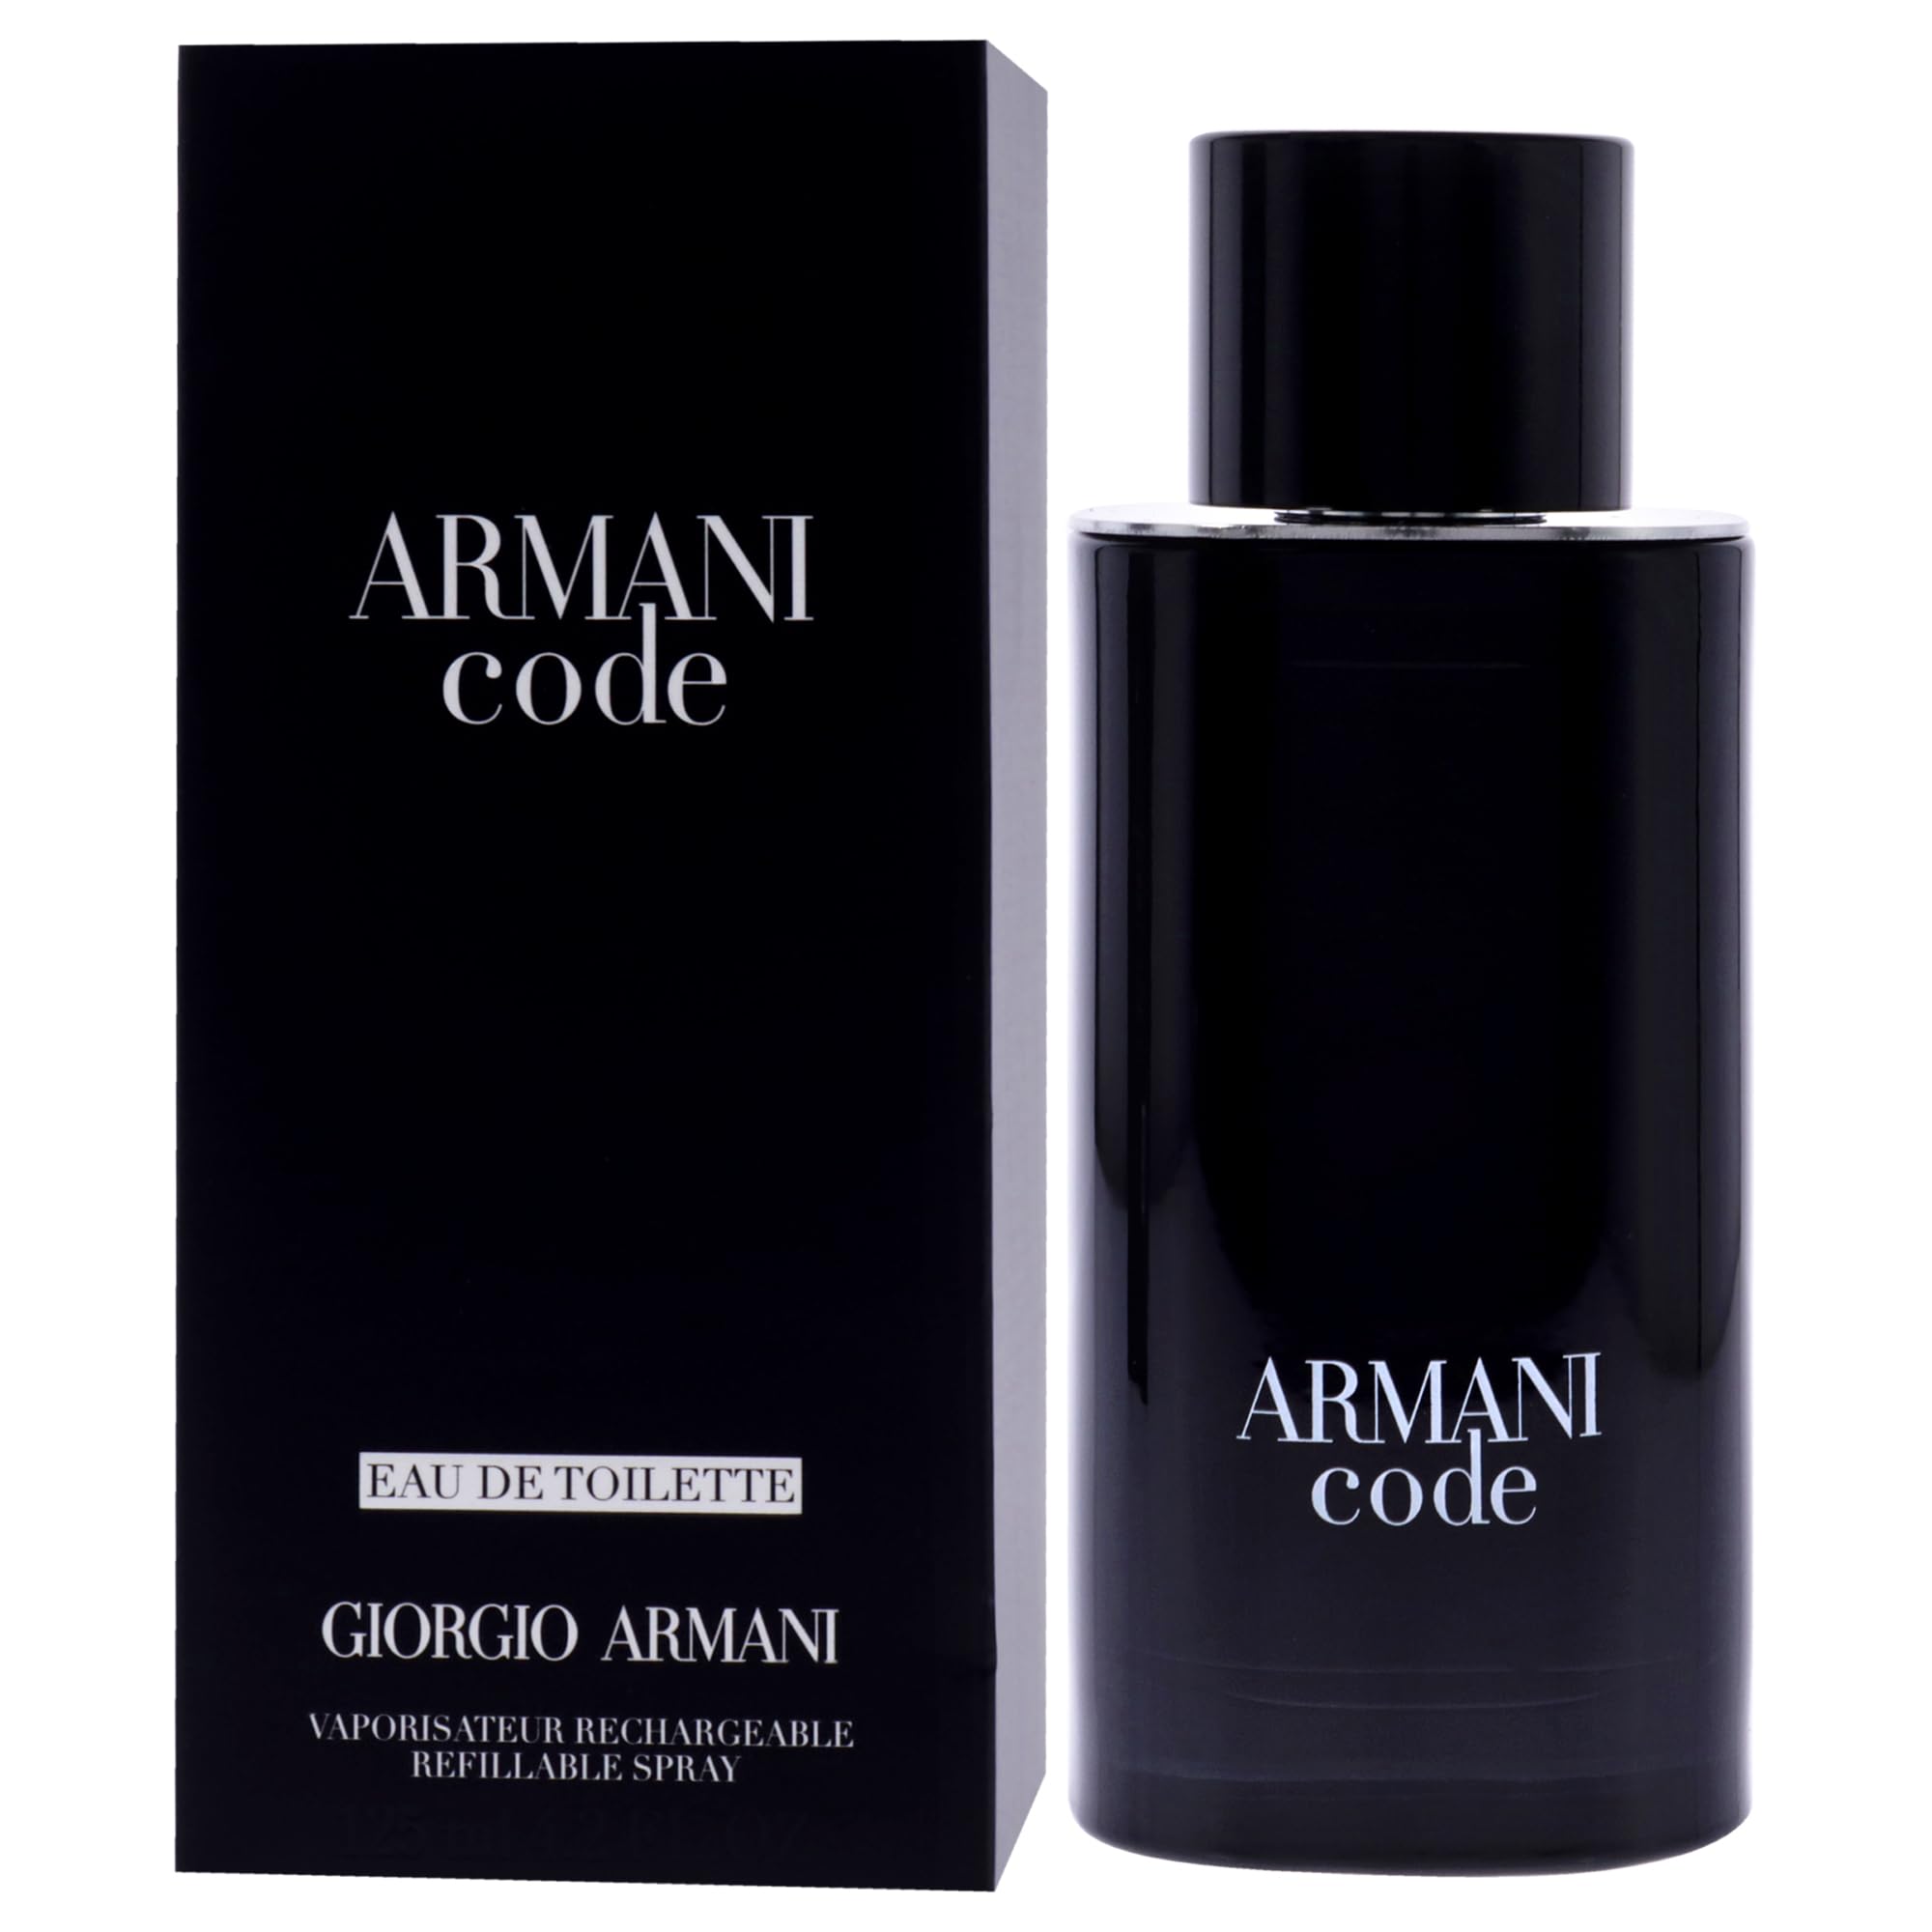 Giorgio Armani Armani Code for Men - 4.2 oz EDT Spray (Refillable)